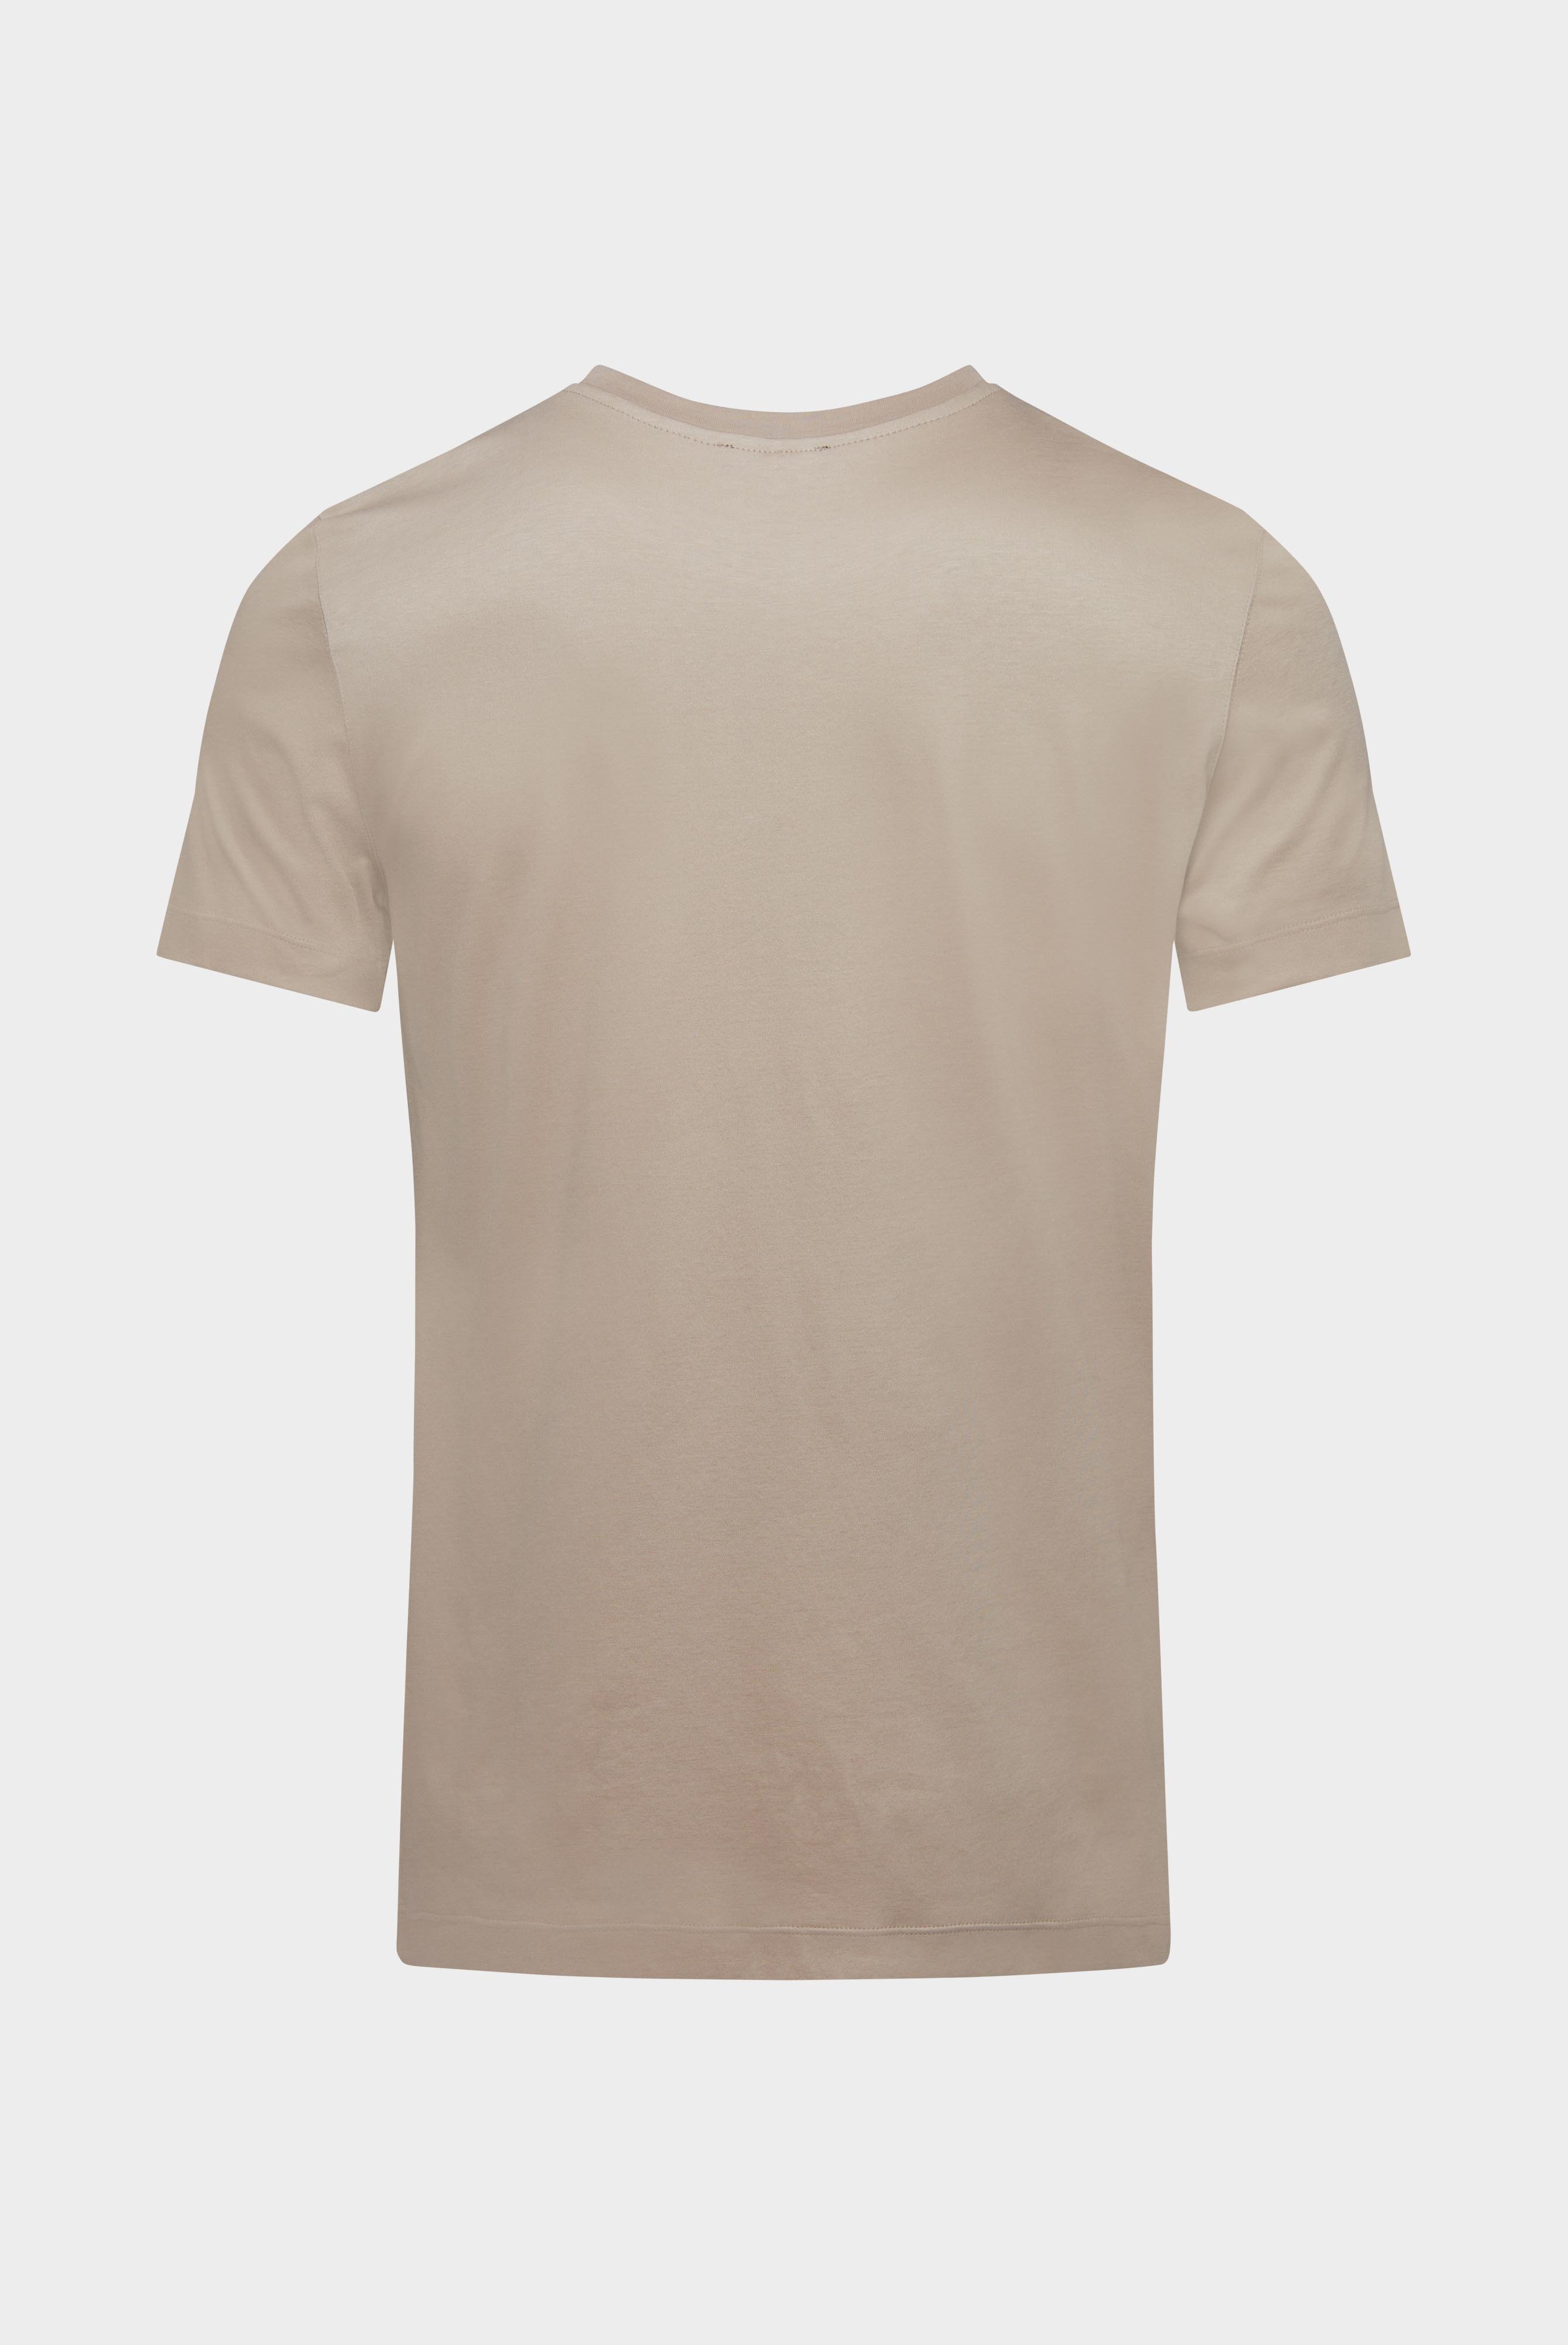 T-Shirts+T-Shirt made of Swiss Cotton+20.1717.UX.180031.140.XXL